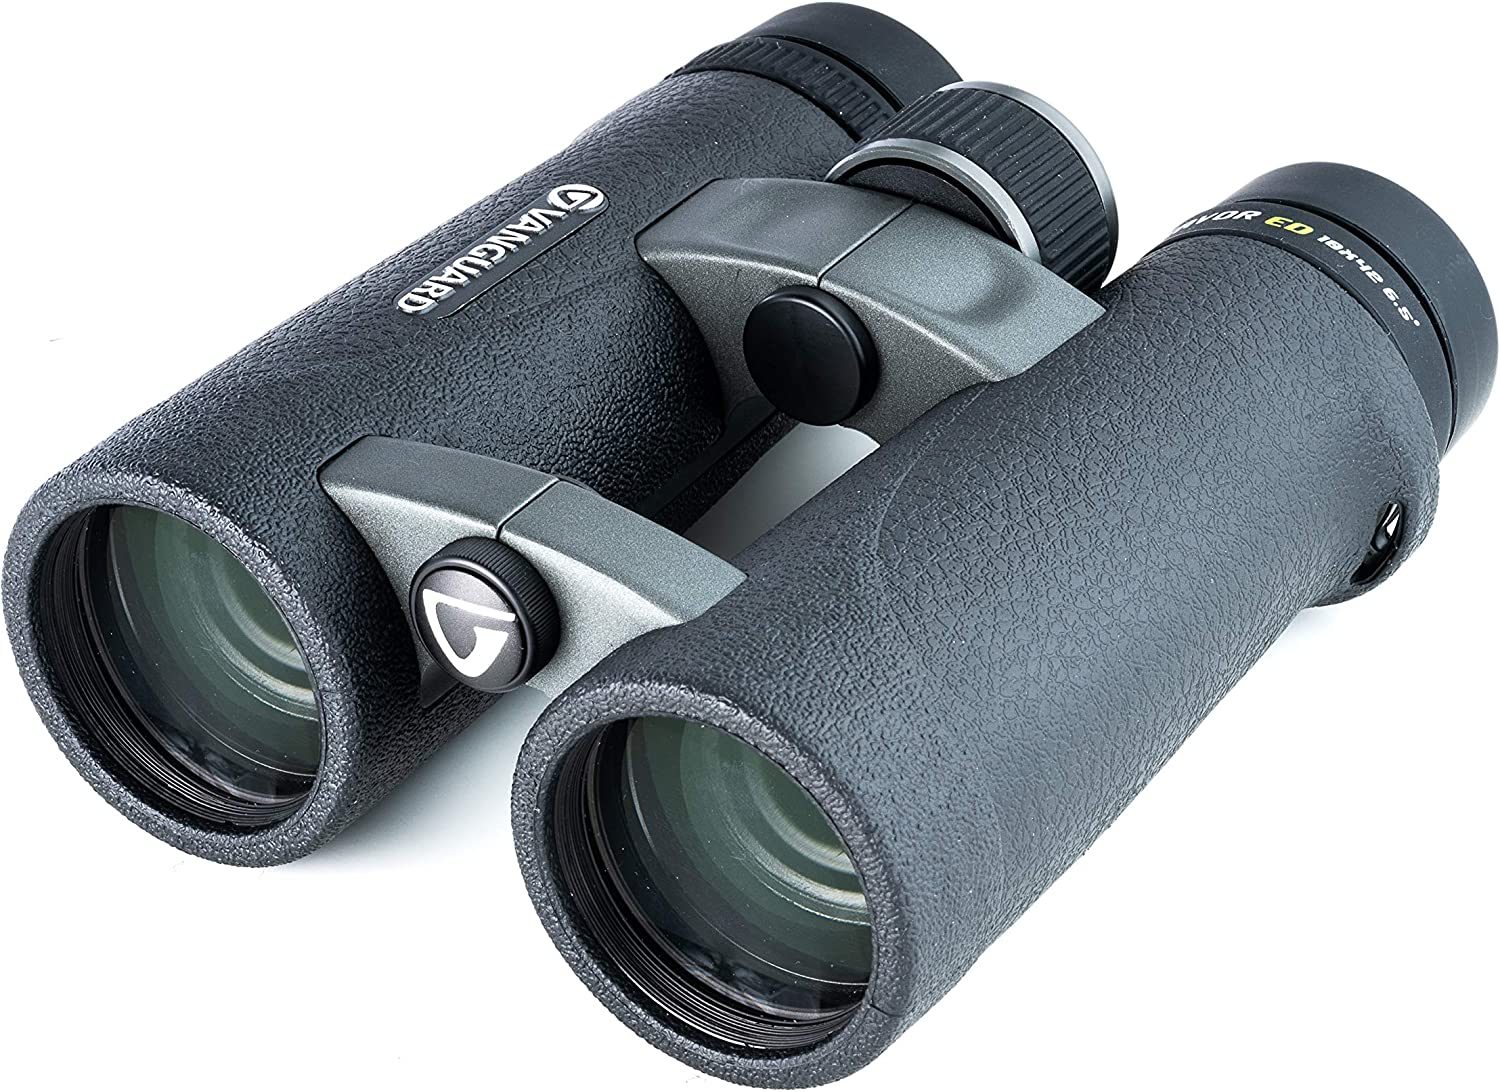 Vanguard Endeavor 10×42 Binocular With ED Glass